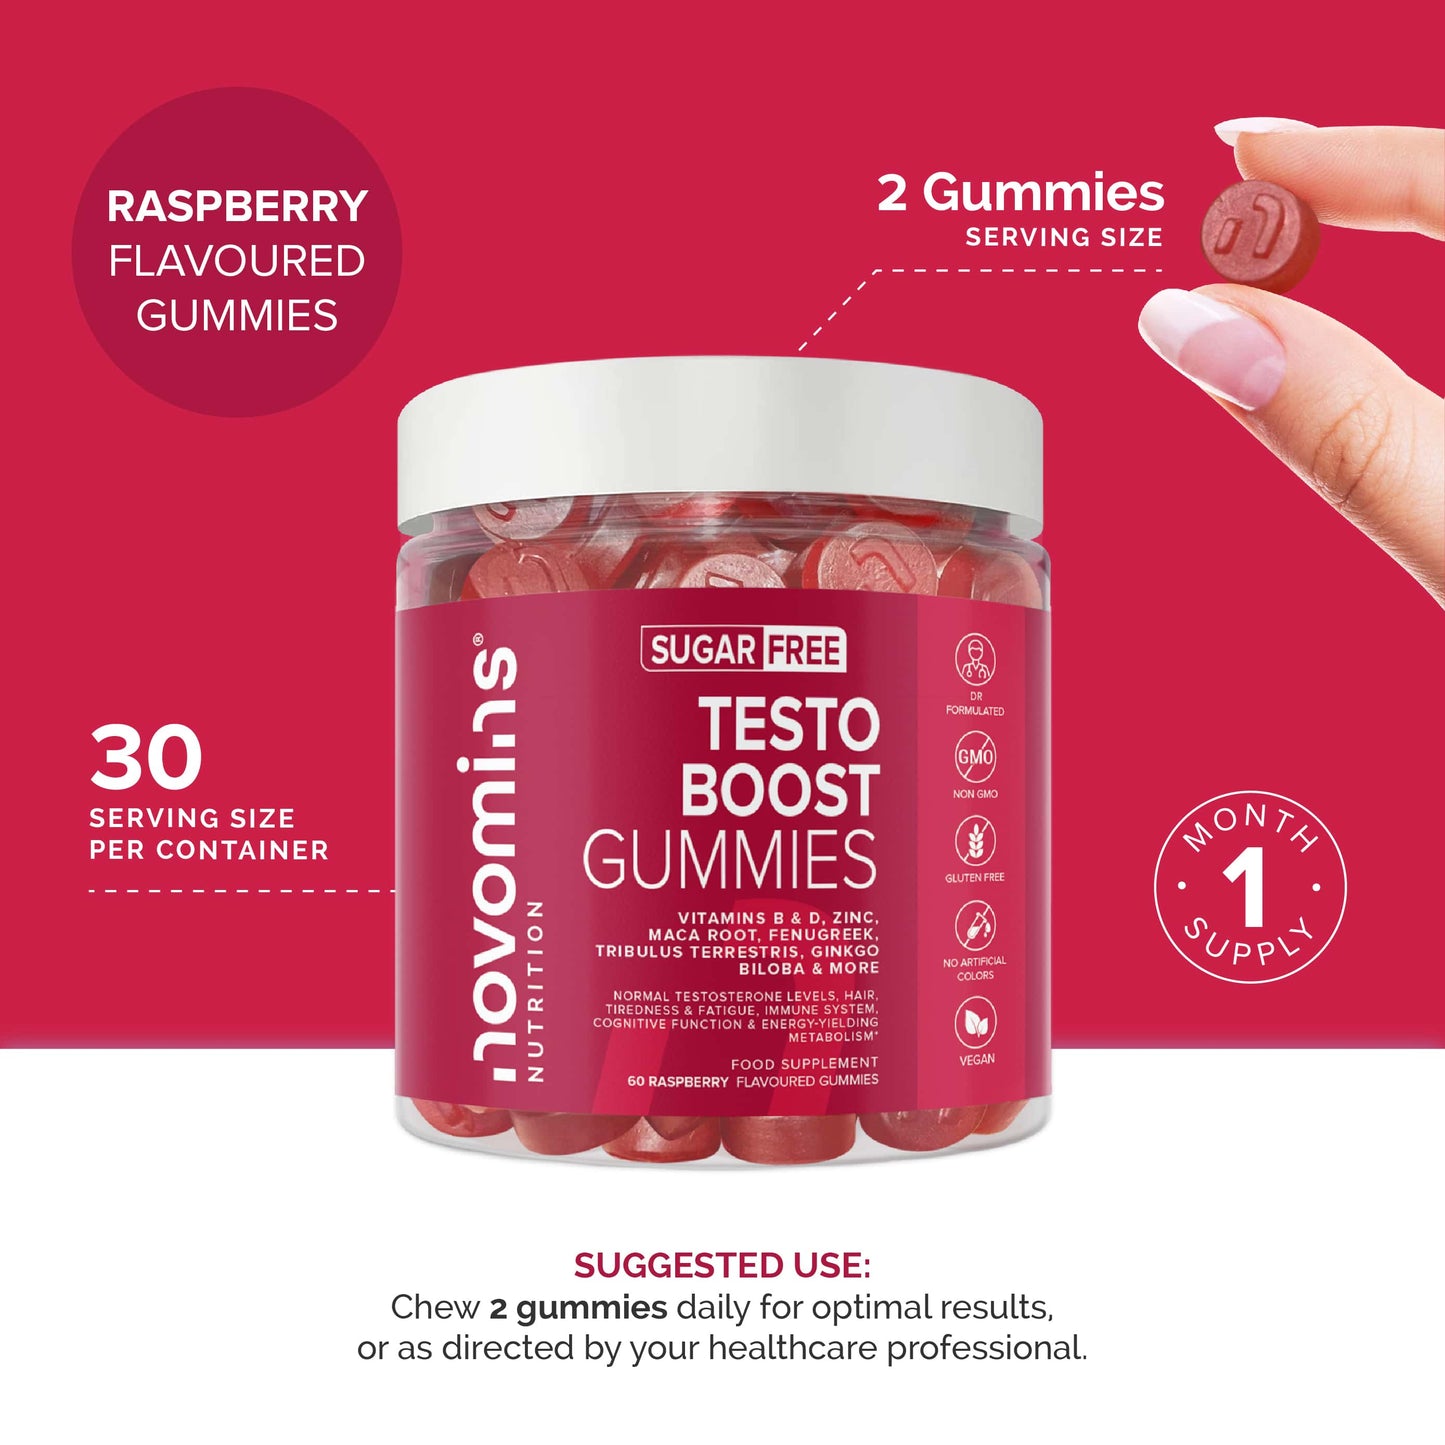 Testo-Boost Gummies